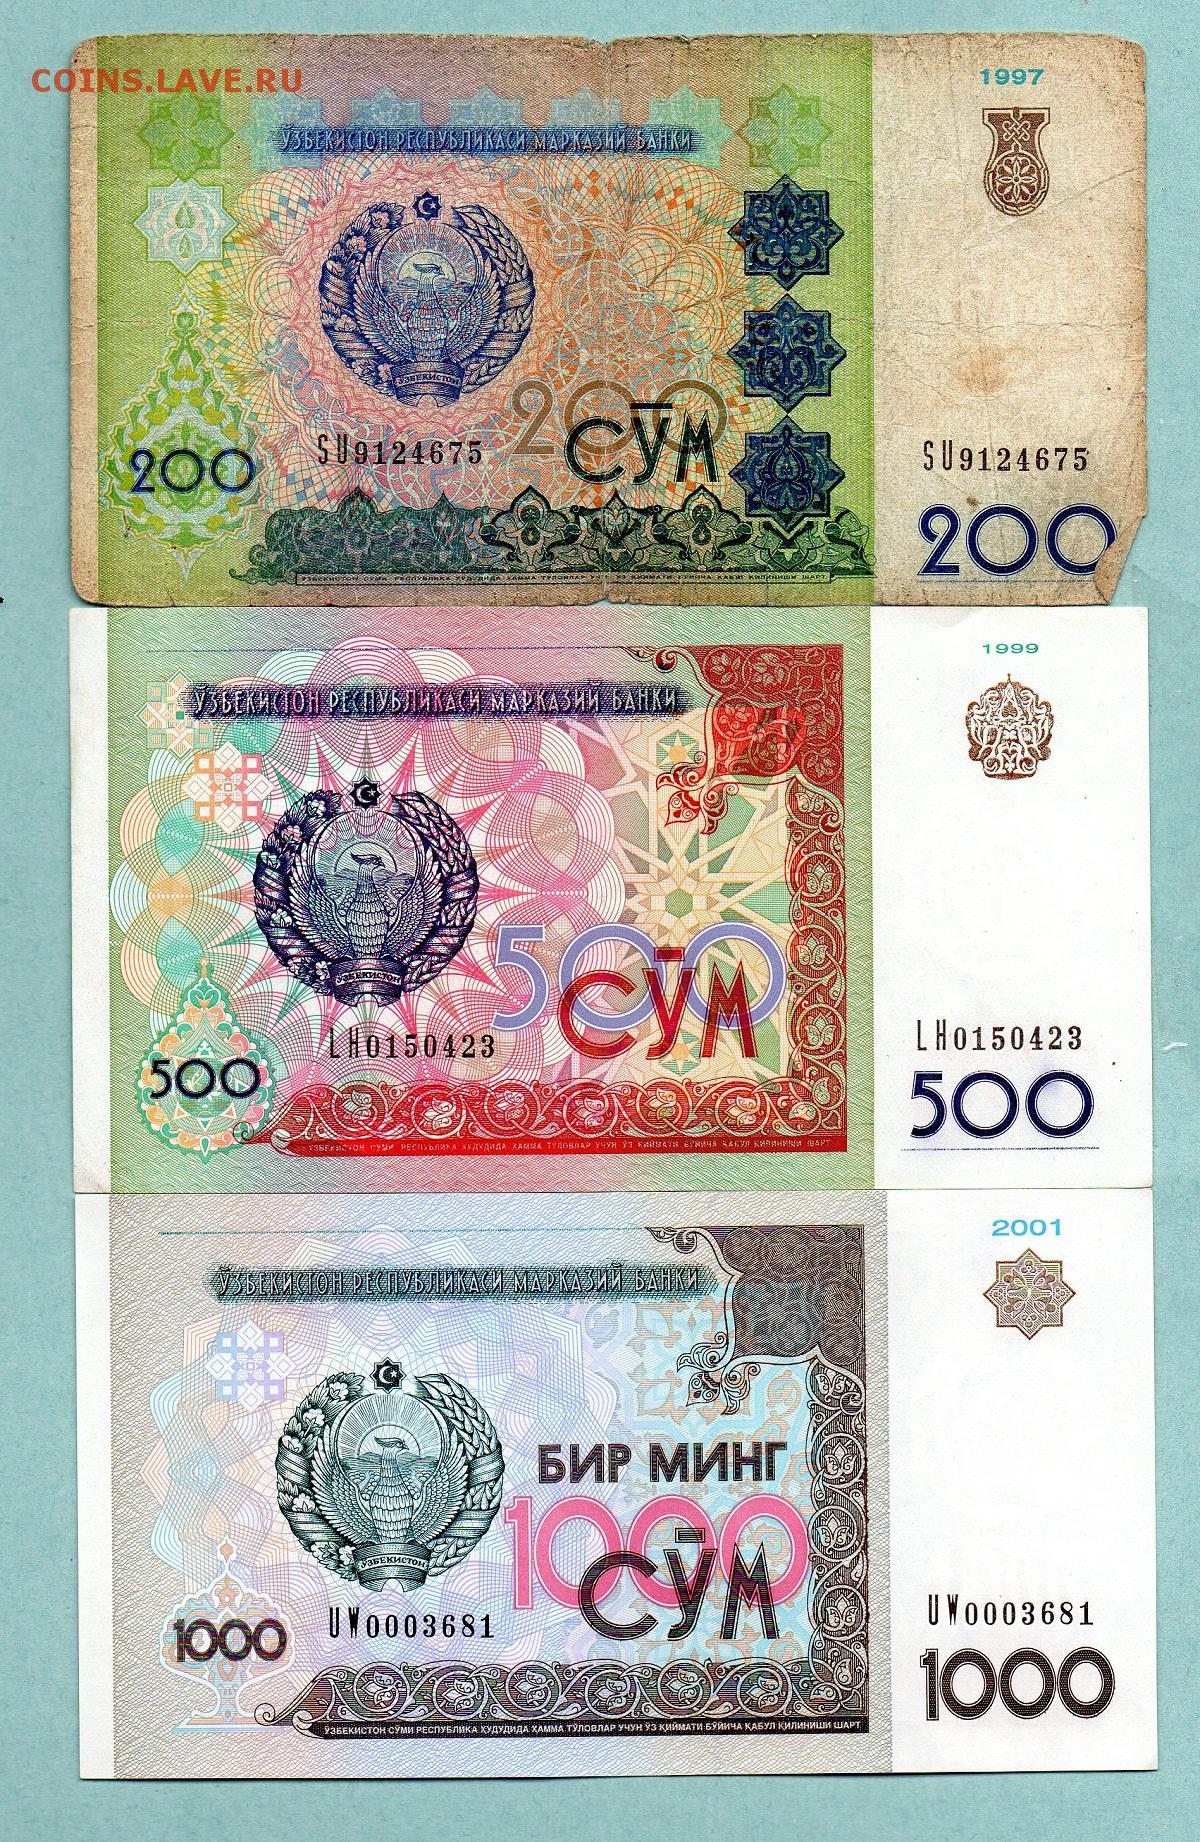 Минг сум в рублях. Банкноты Узбекистана 200 сум. 500 Сум Узбекистан. 200 Som в рублях Узбекистан. Купюра 200 сум Узбекистан.